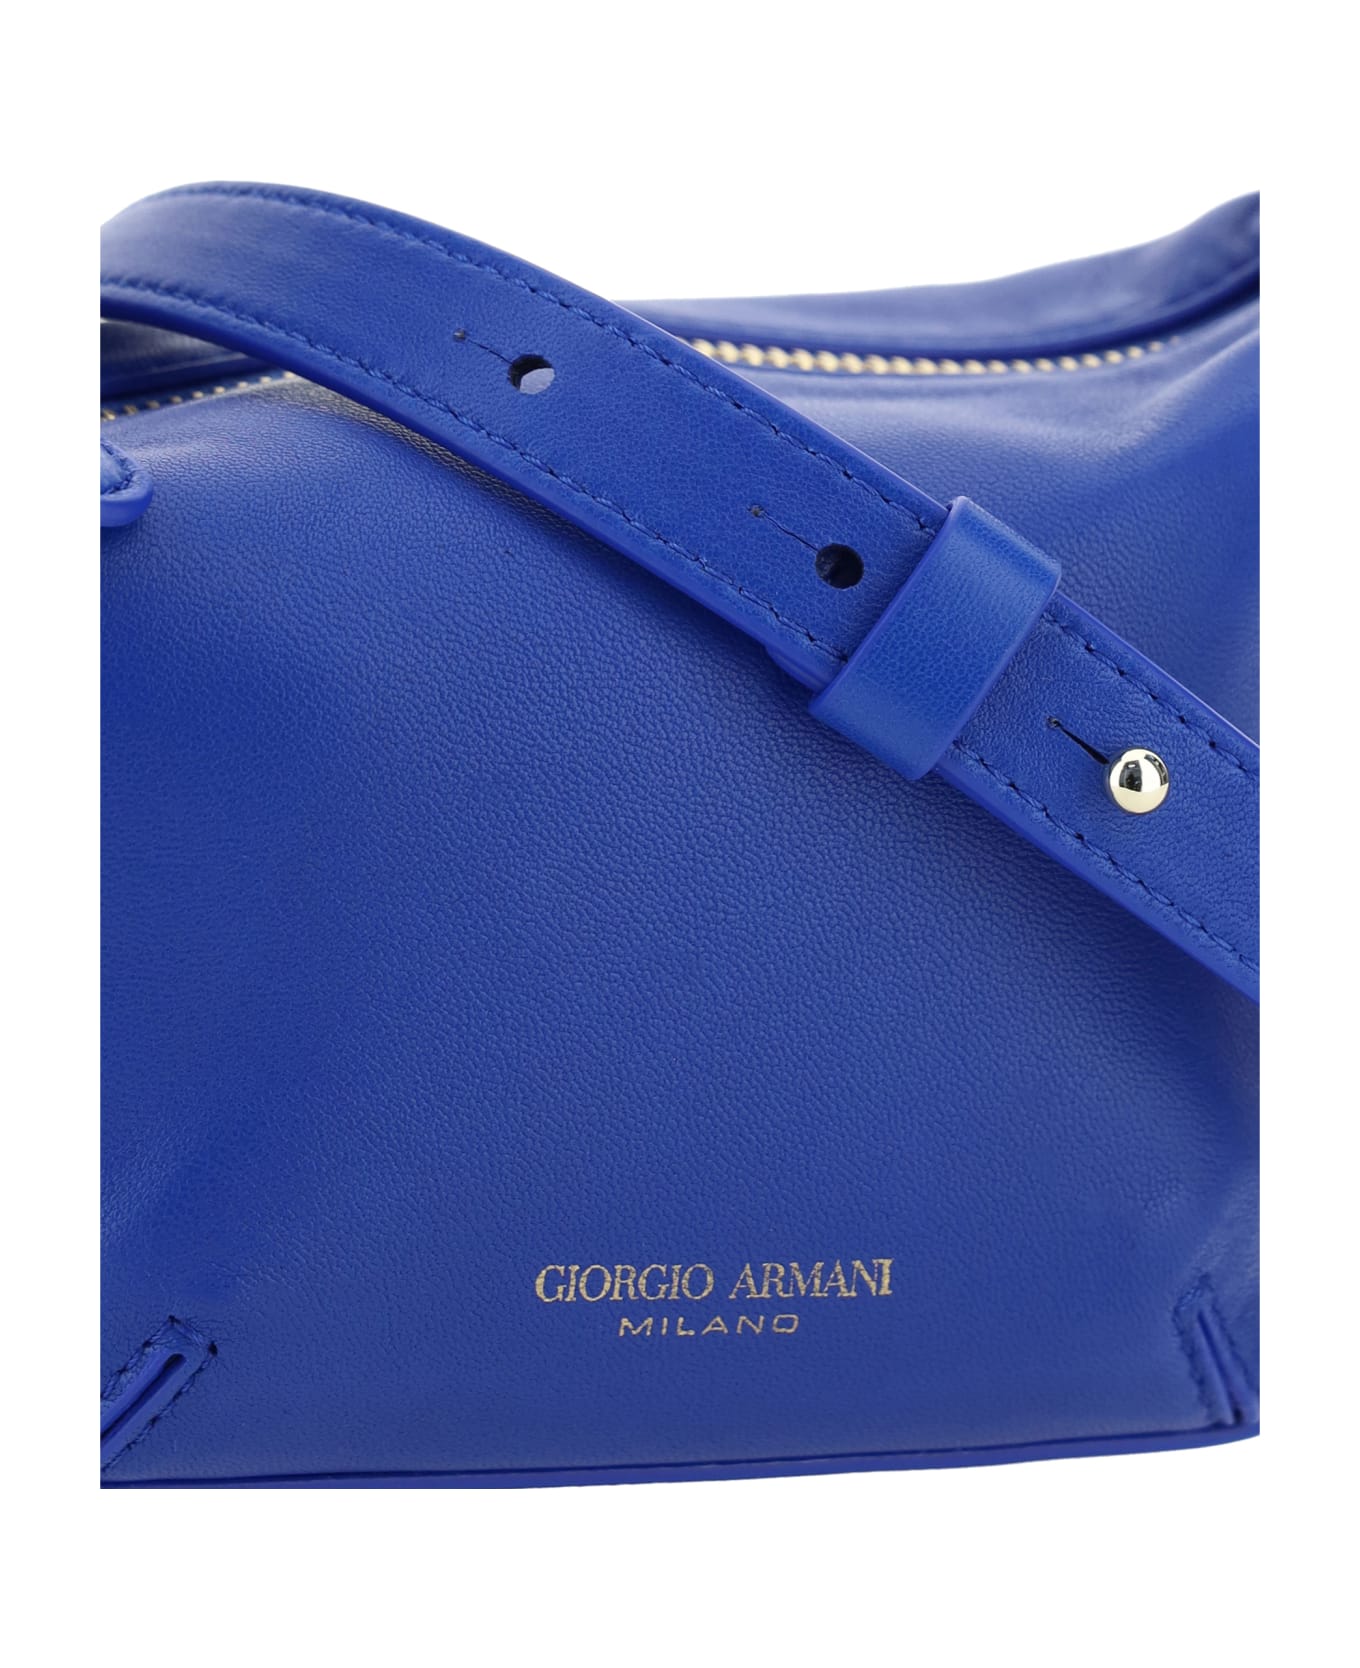 Giorgio Armani Green Mini Shoulder Bag - Blu China